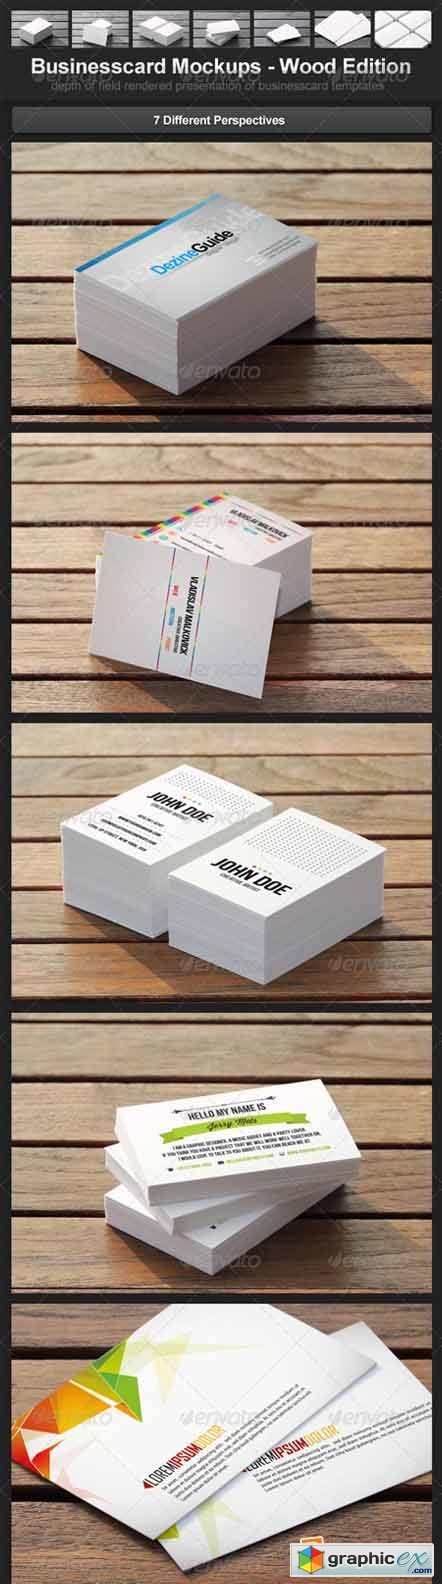 Businesscard Mockups - Wood Edition 3392088